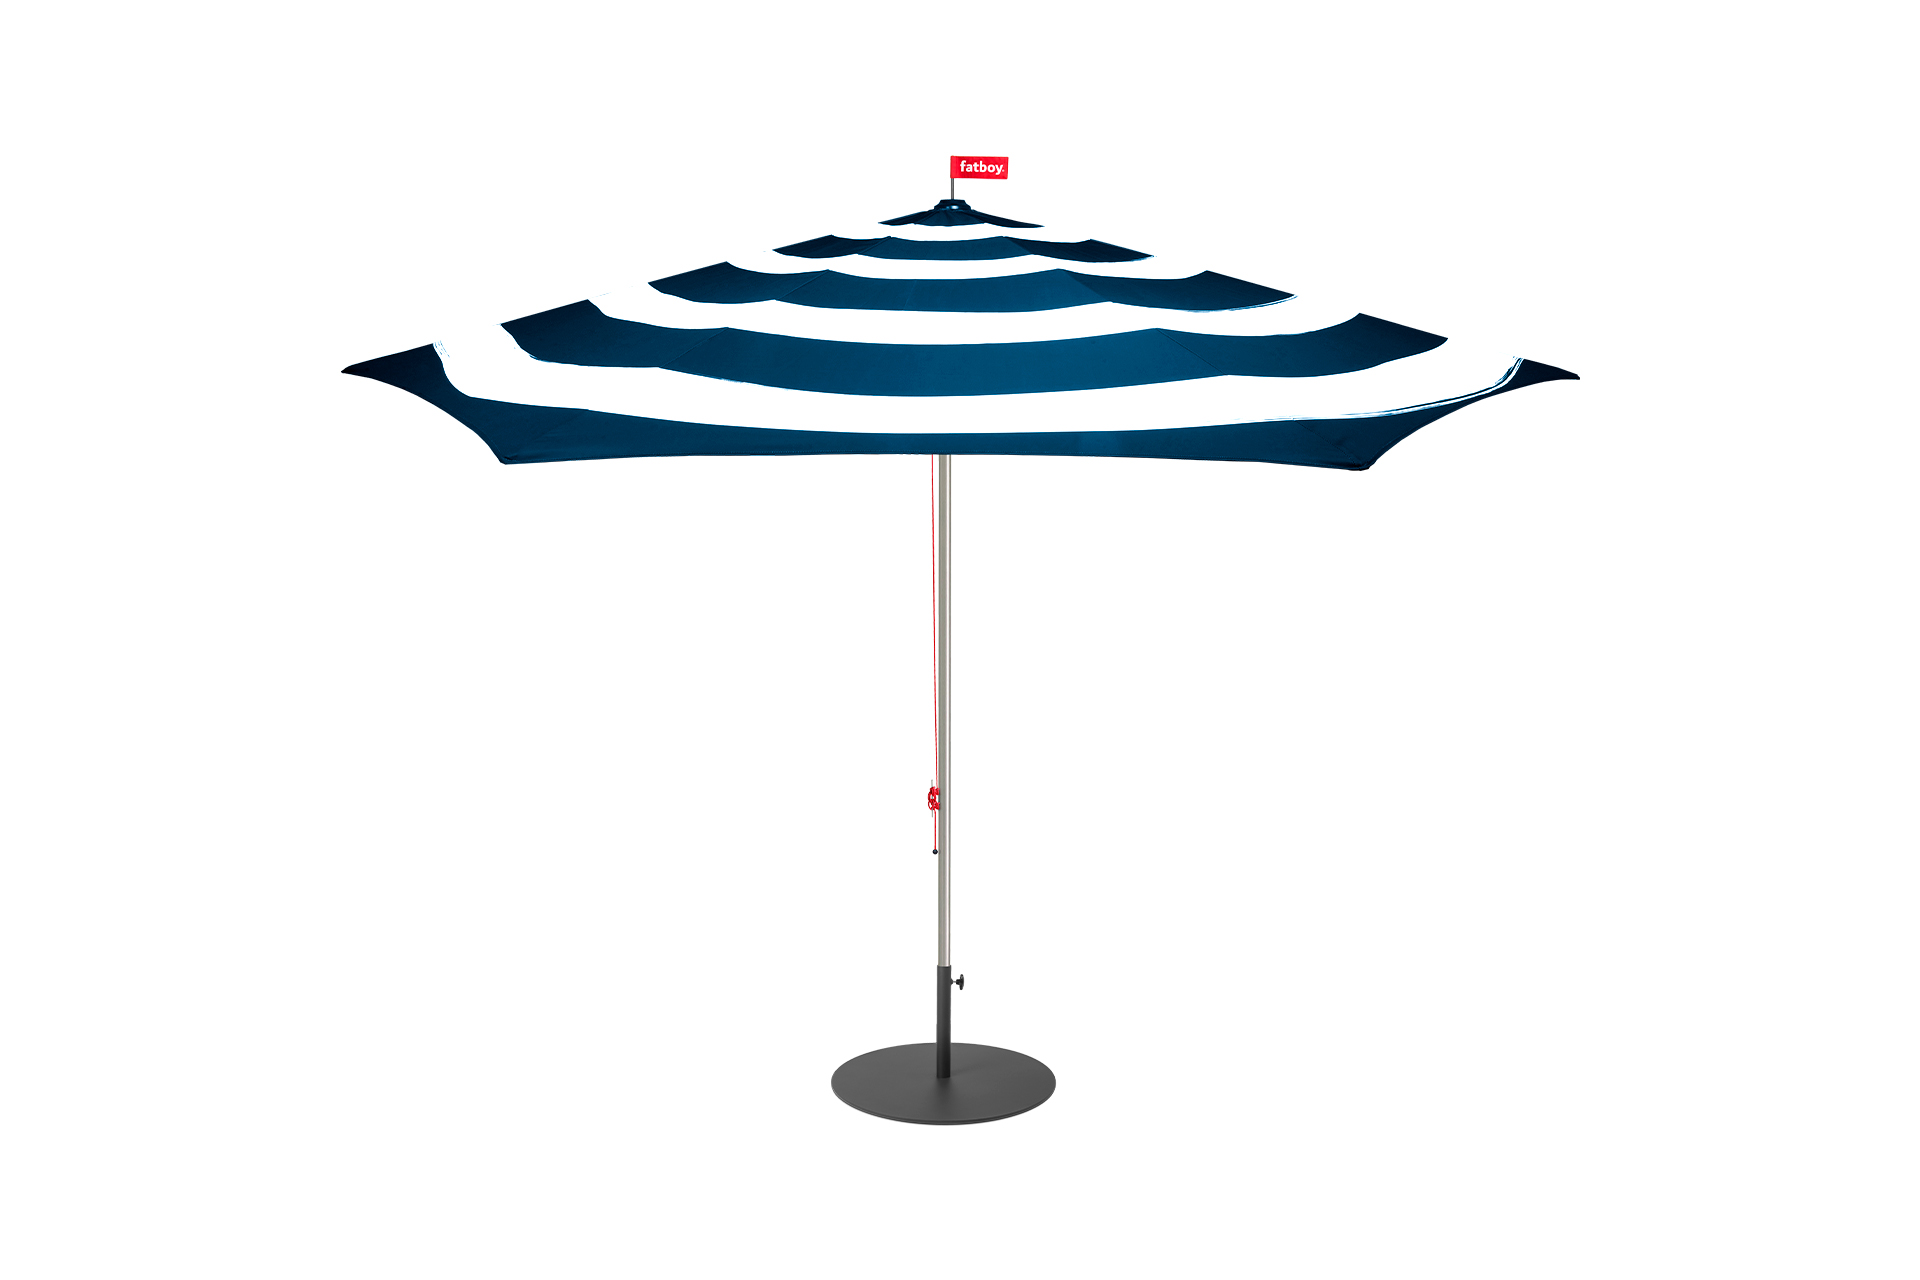 Discreet lengte Digitaal Stevige, grote parasols in diverse uitvoeringen | Fatboy